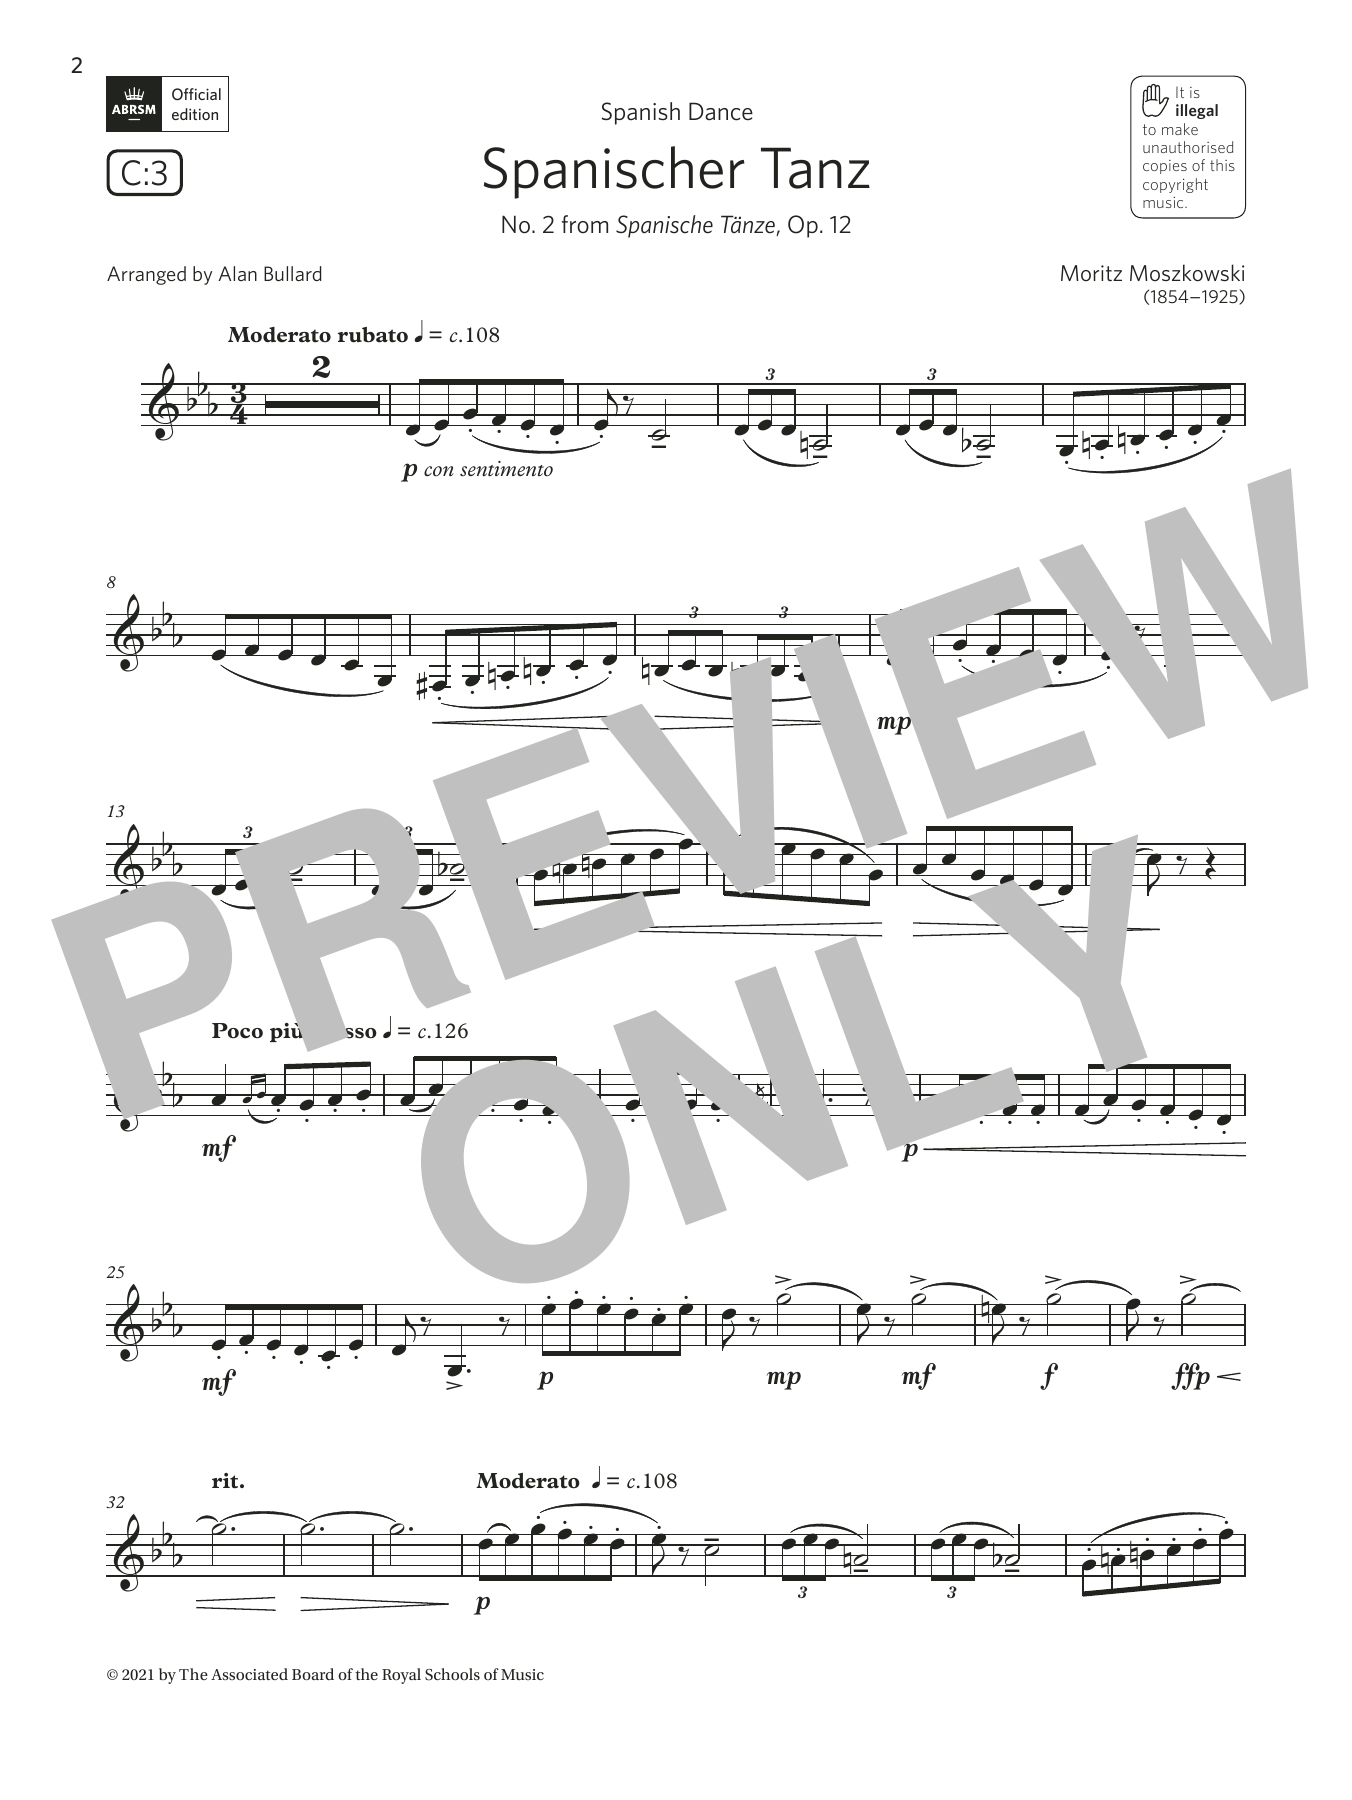 Moritz Moszkowski Spanischer Tanz (from Spanische Tänze) (Grade 5 List C3 from the ABRSM Clarinet syllabus from 2022) Sheet Music Notes & Chords for Clarinet Solo - Download or Print PDF